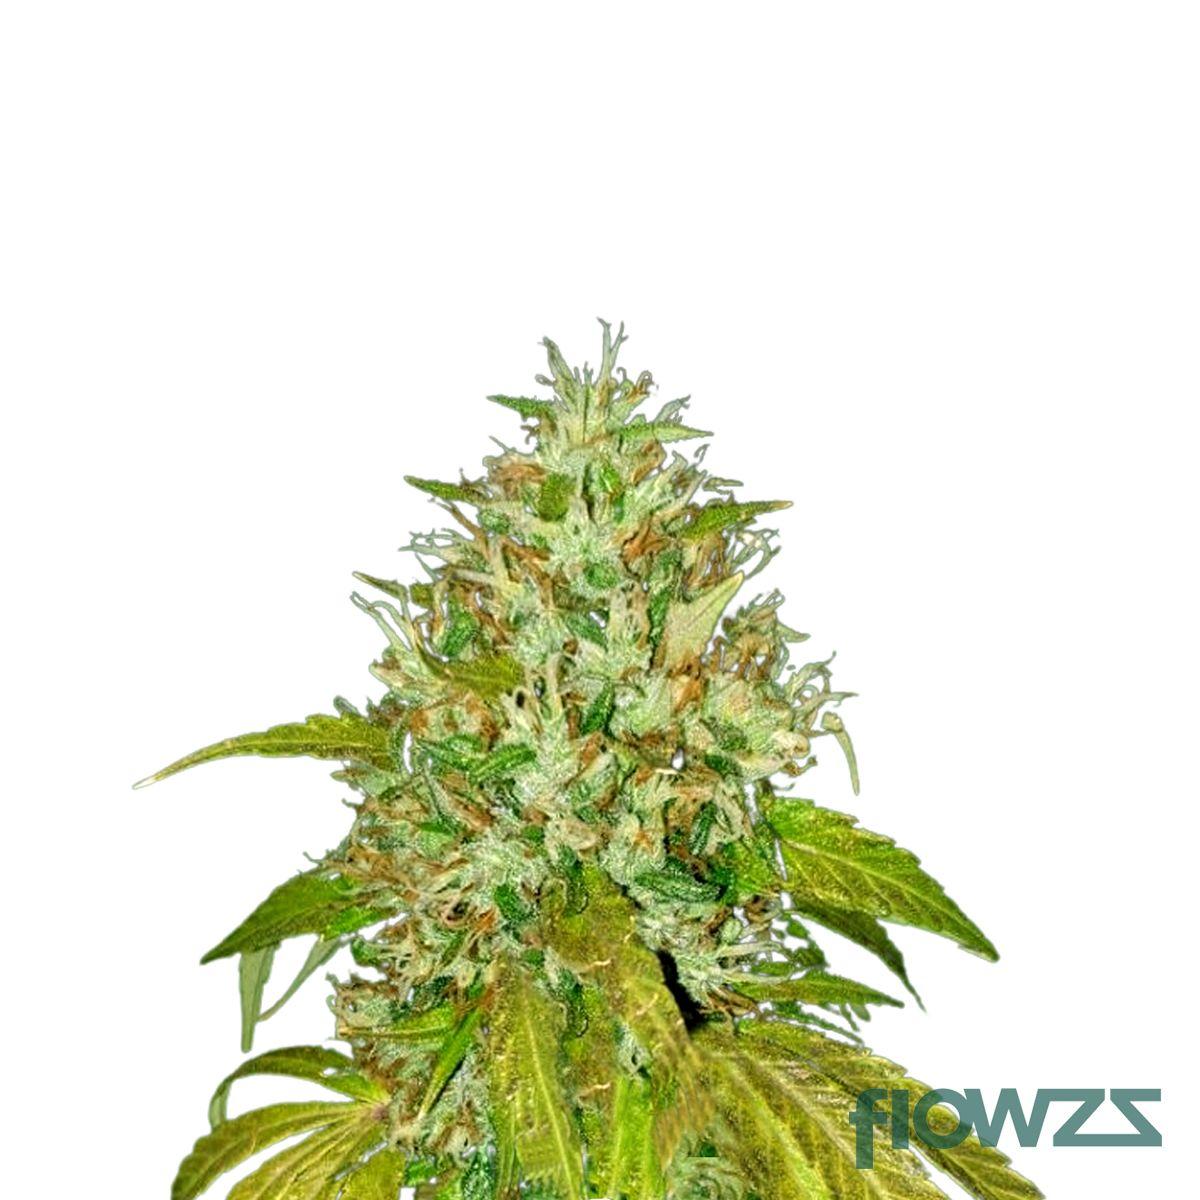 Galaxy Cannabis Strain - flowzz.com Preisvergleich